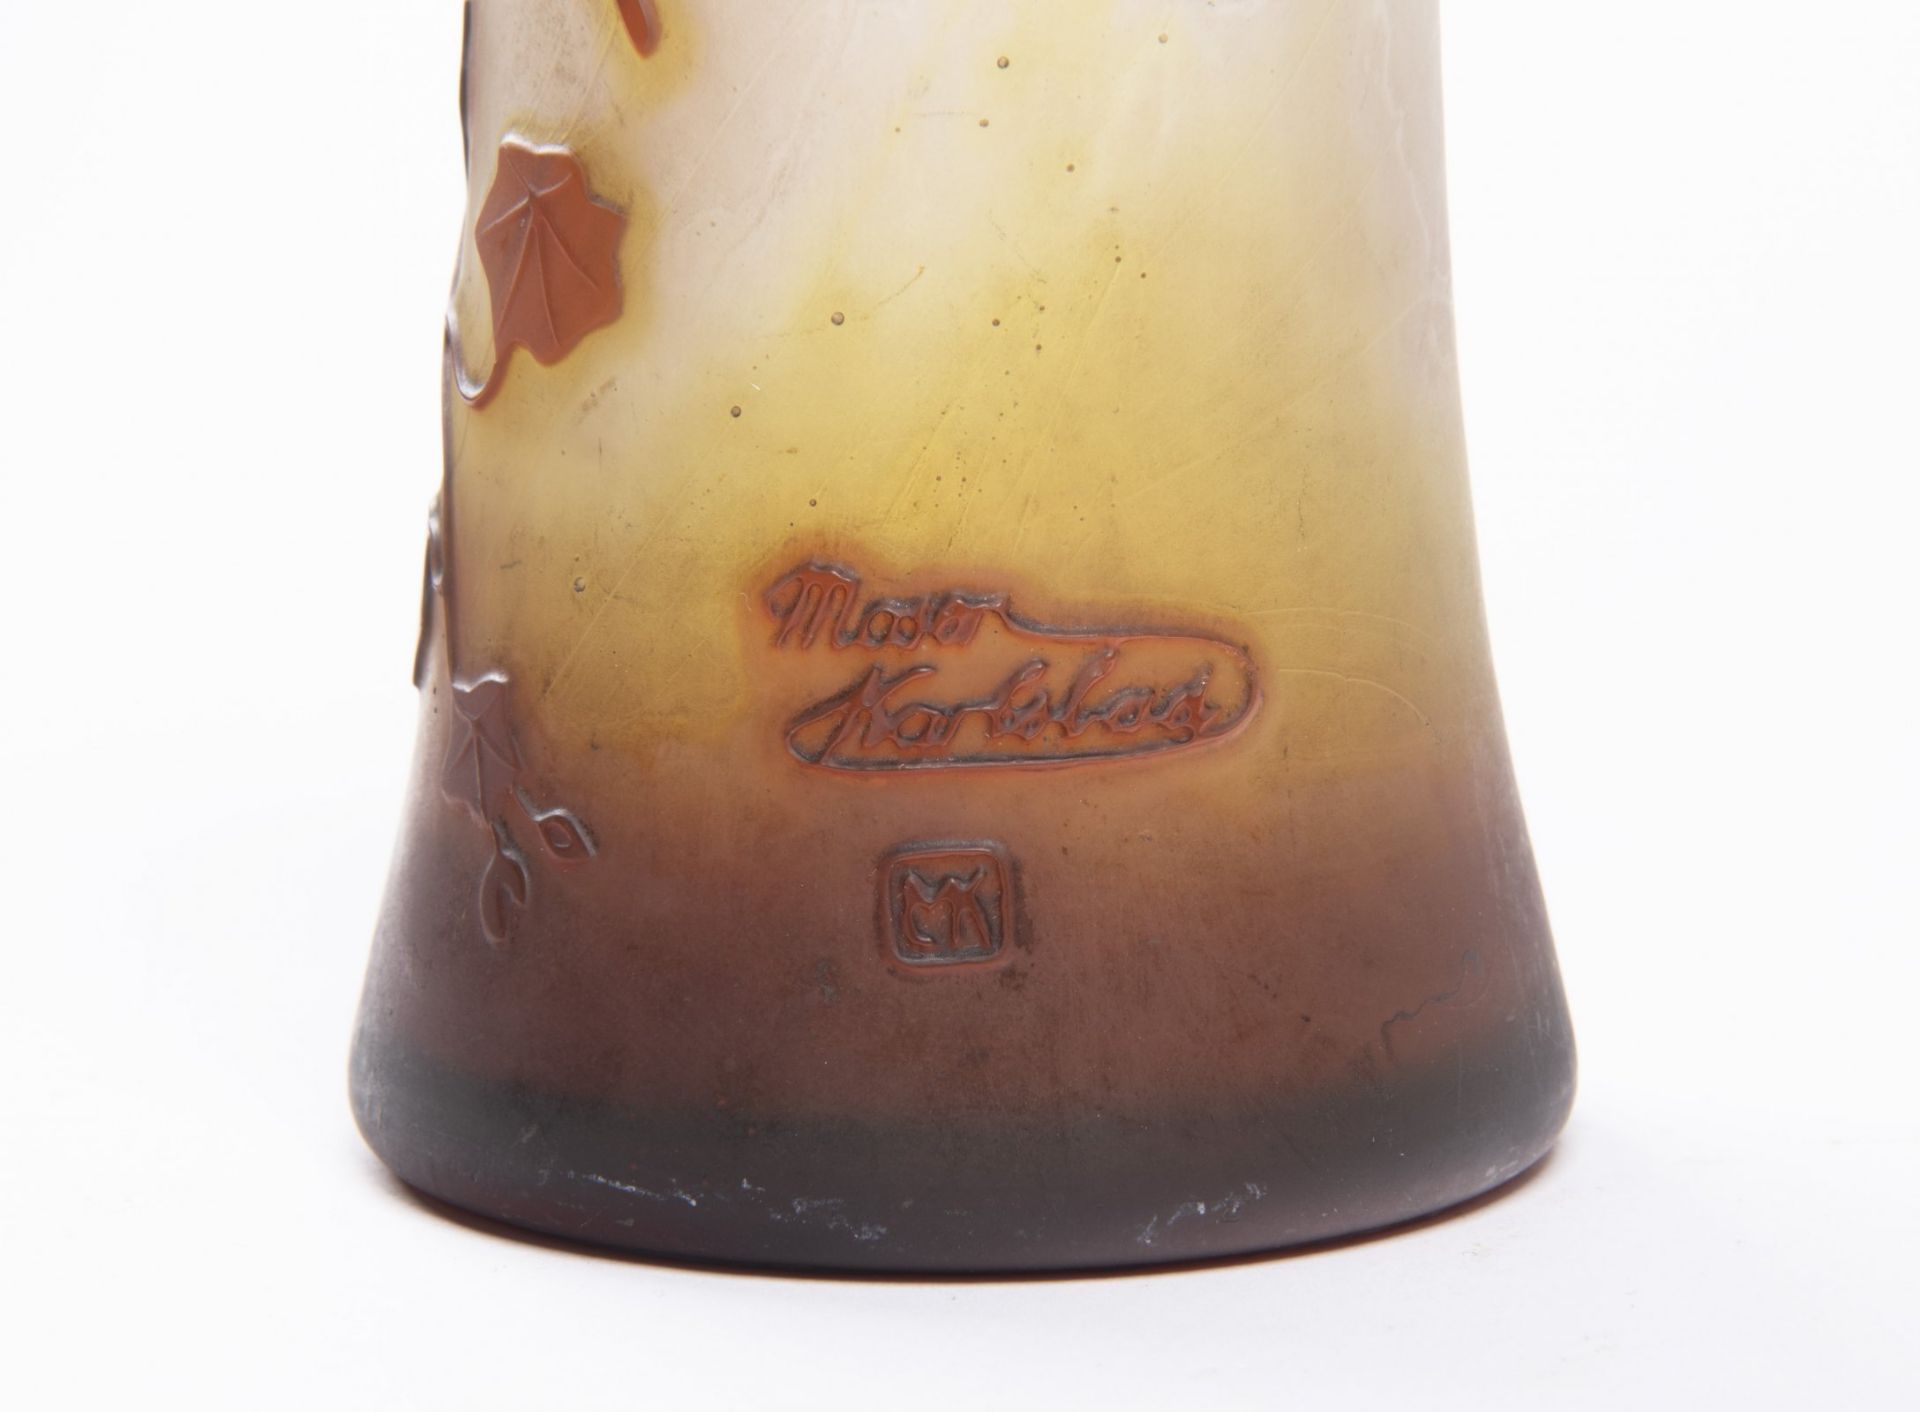 MOSER VASE Ca. 1910 Bohemia Glass cameo 16,5 cm Signed: In lower half "Moser" Moser vase in the - Bild 2 aus 2